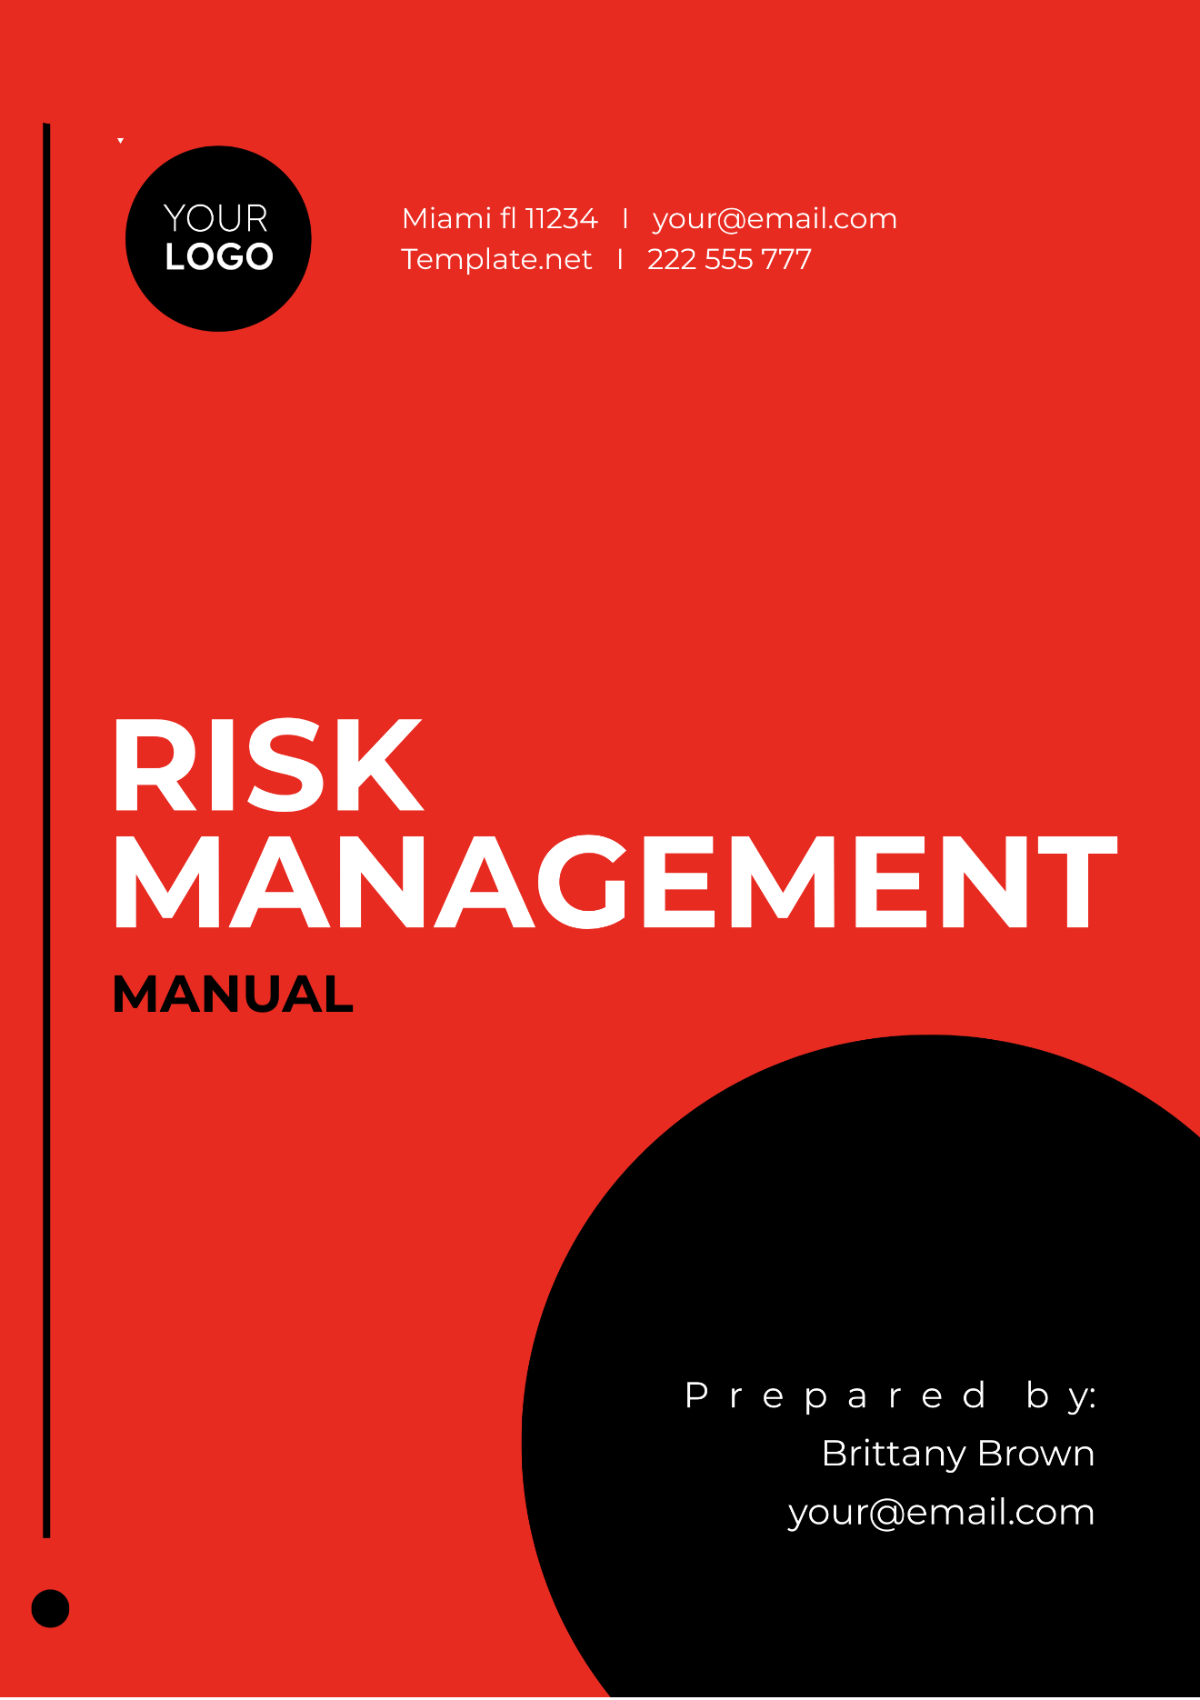 Risk Management Manual Template